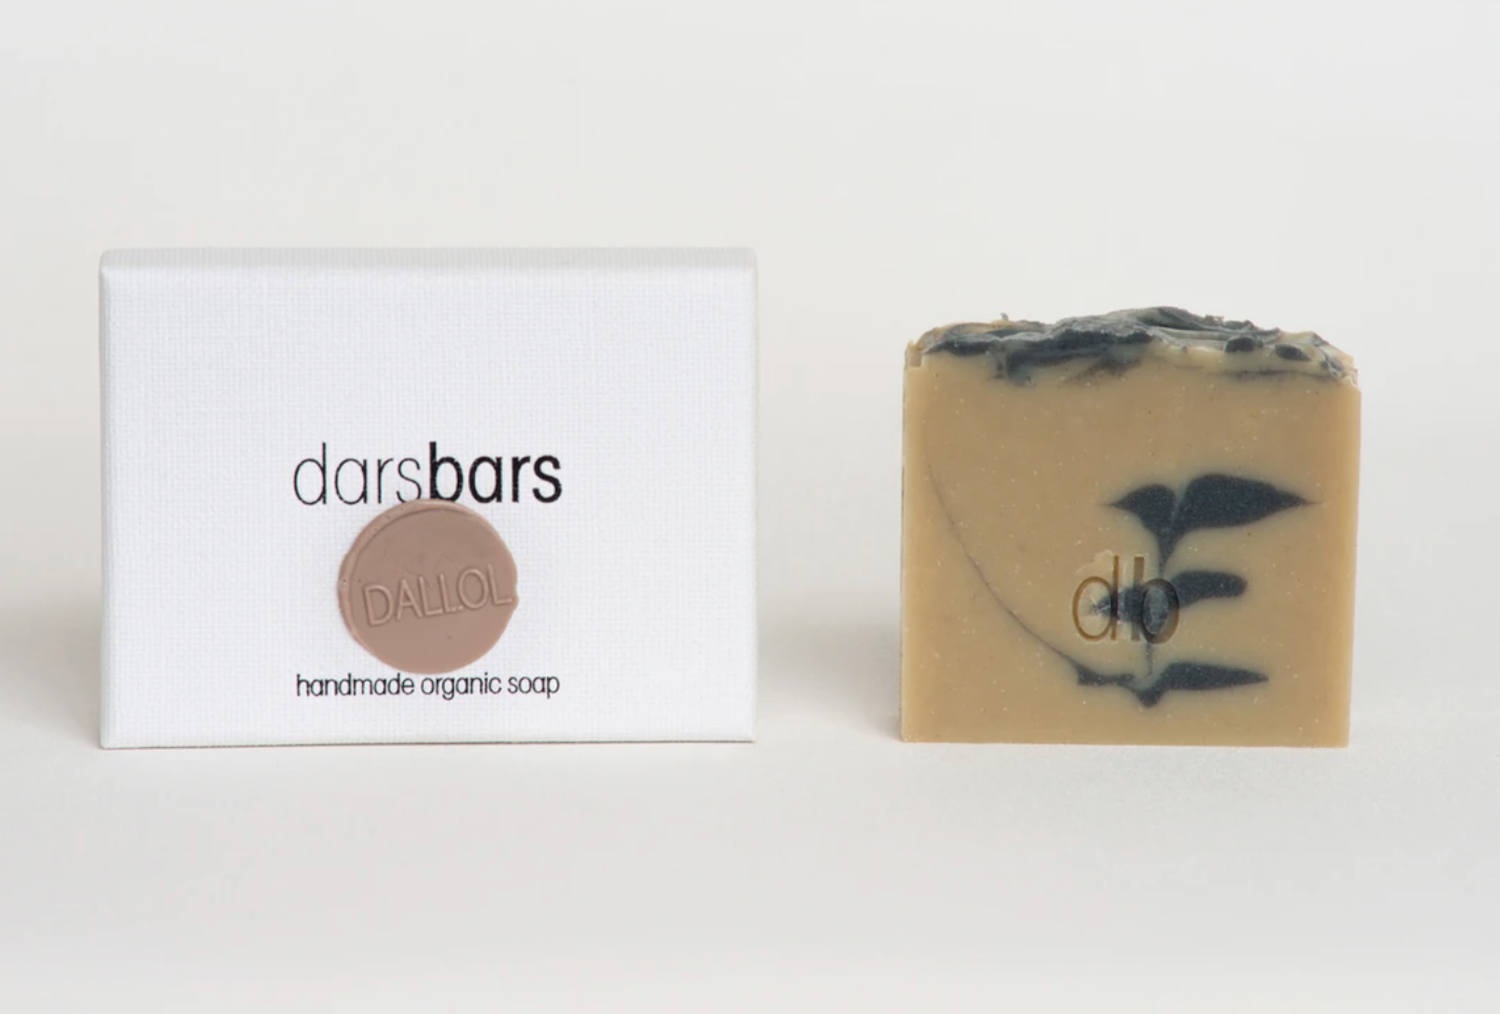 DALLOL darsbars handmade organic unscented soap Sarah Jane Wise stylist.png